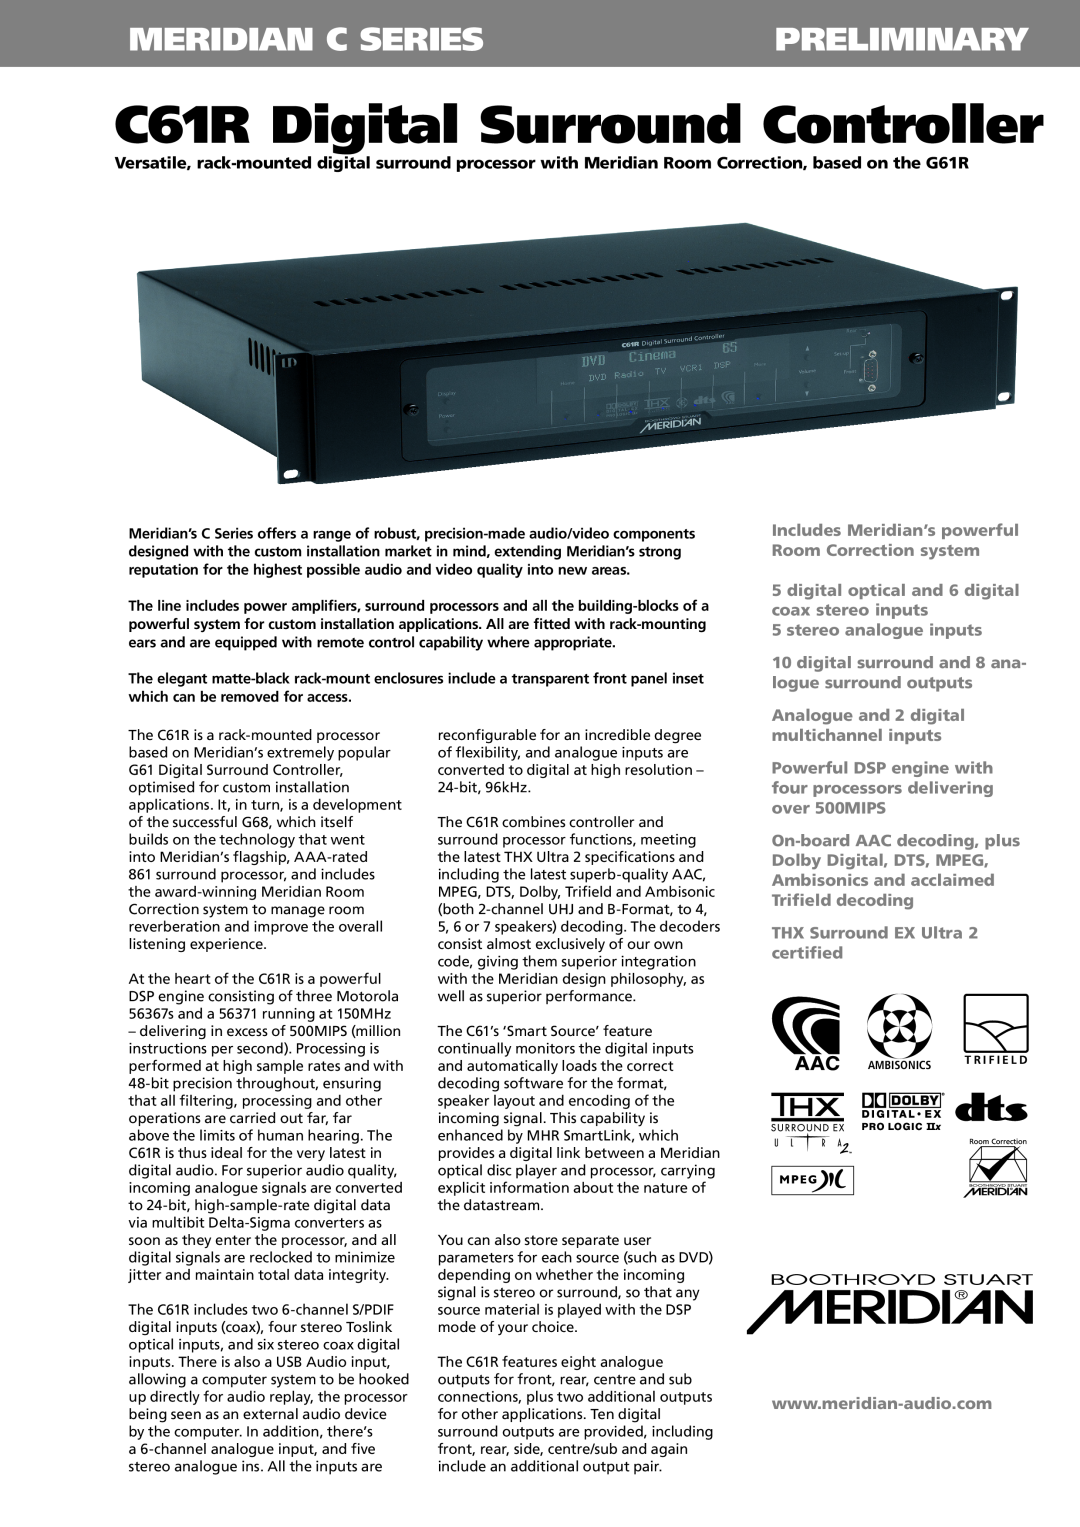 Meridian America specifications Meridian C Series, Preliminary, C61R Digital Surround Controller 